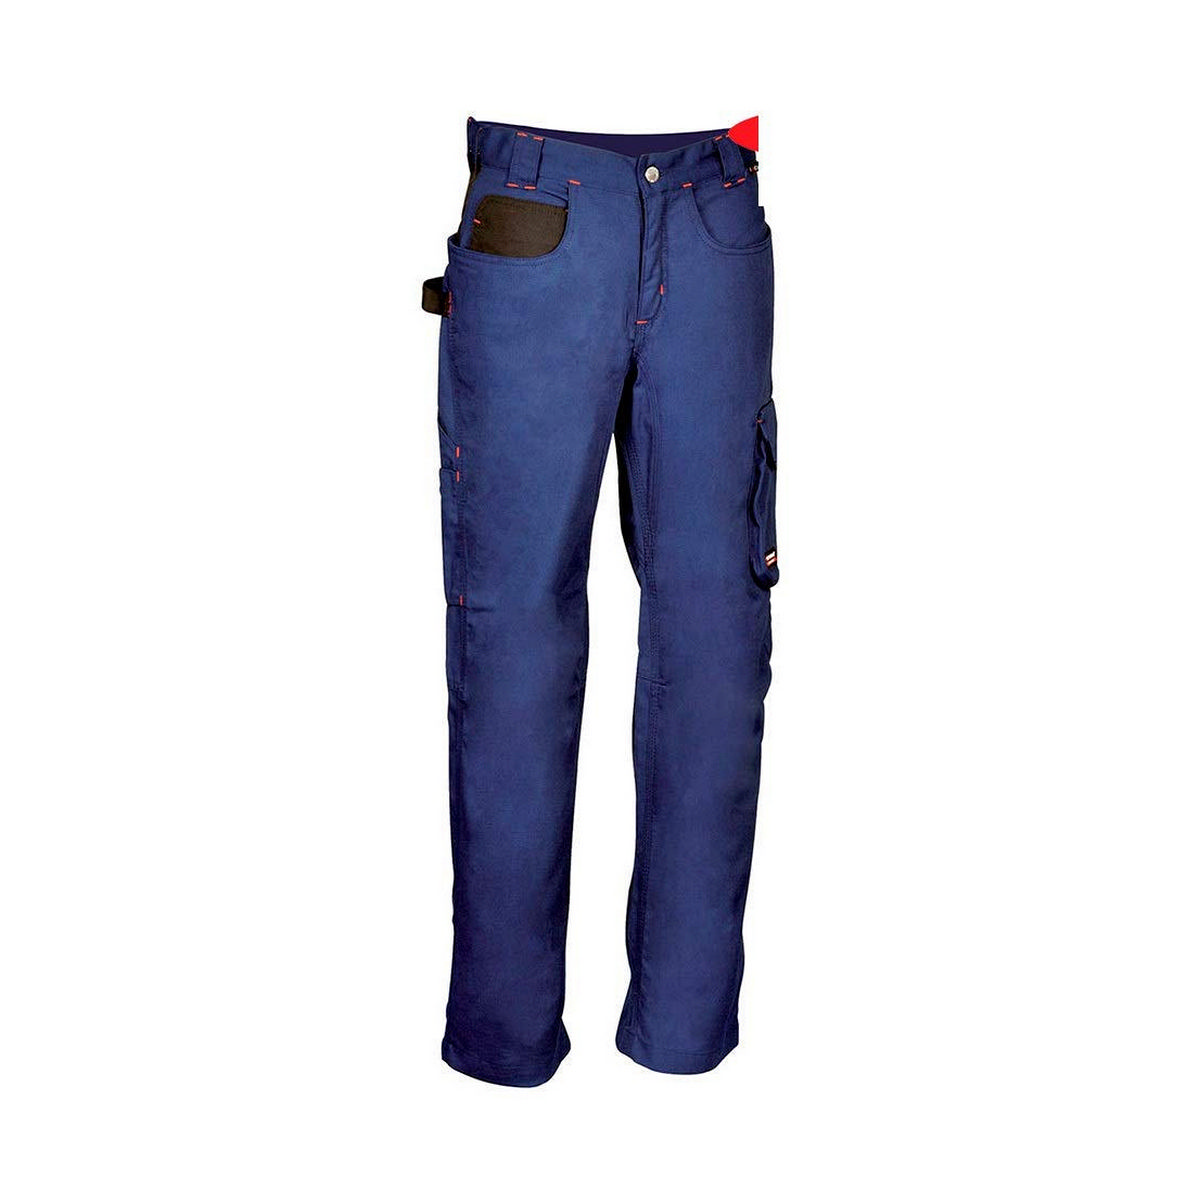 Pantaloni de siguranță Cofra Walklander Femeie Negru Bleumarin - Mărime 44